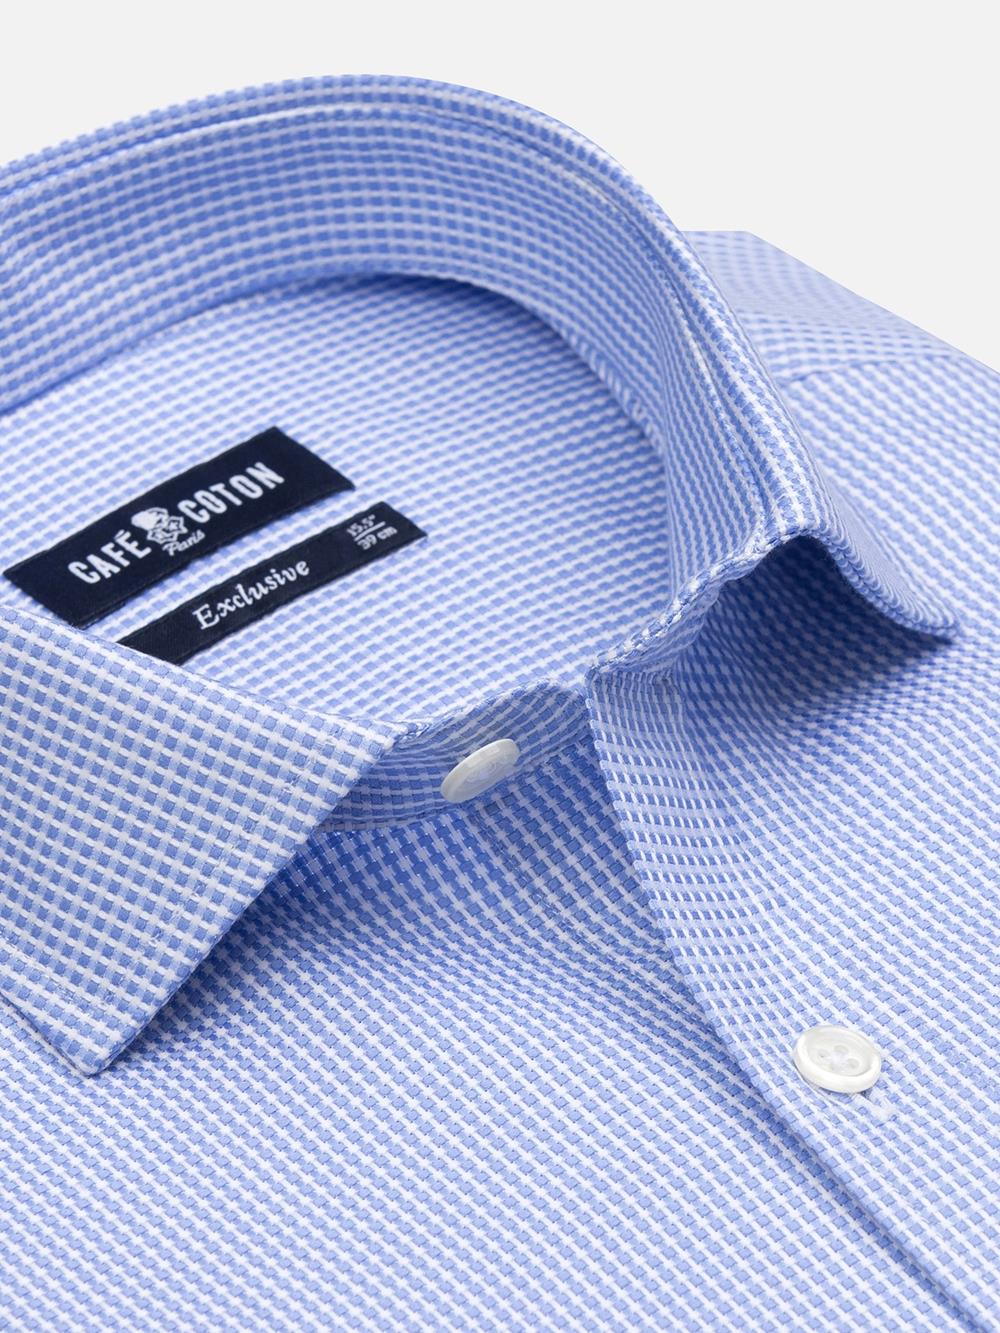 Camicia Creed con texture blu cielo